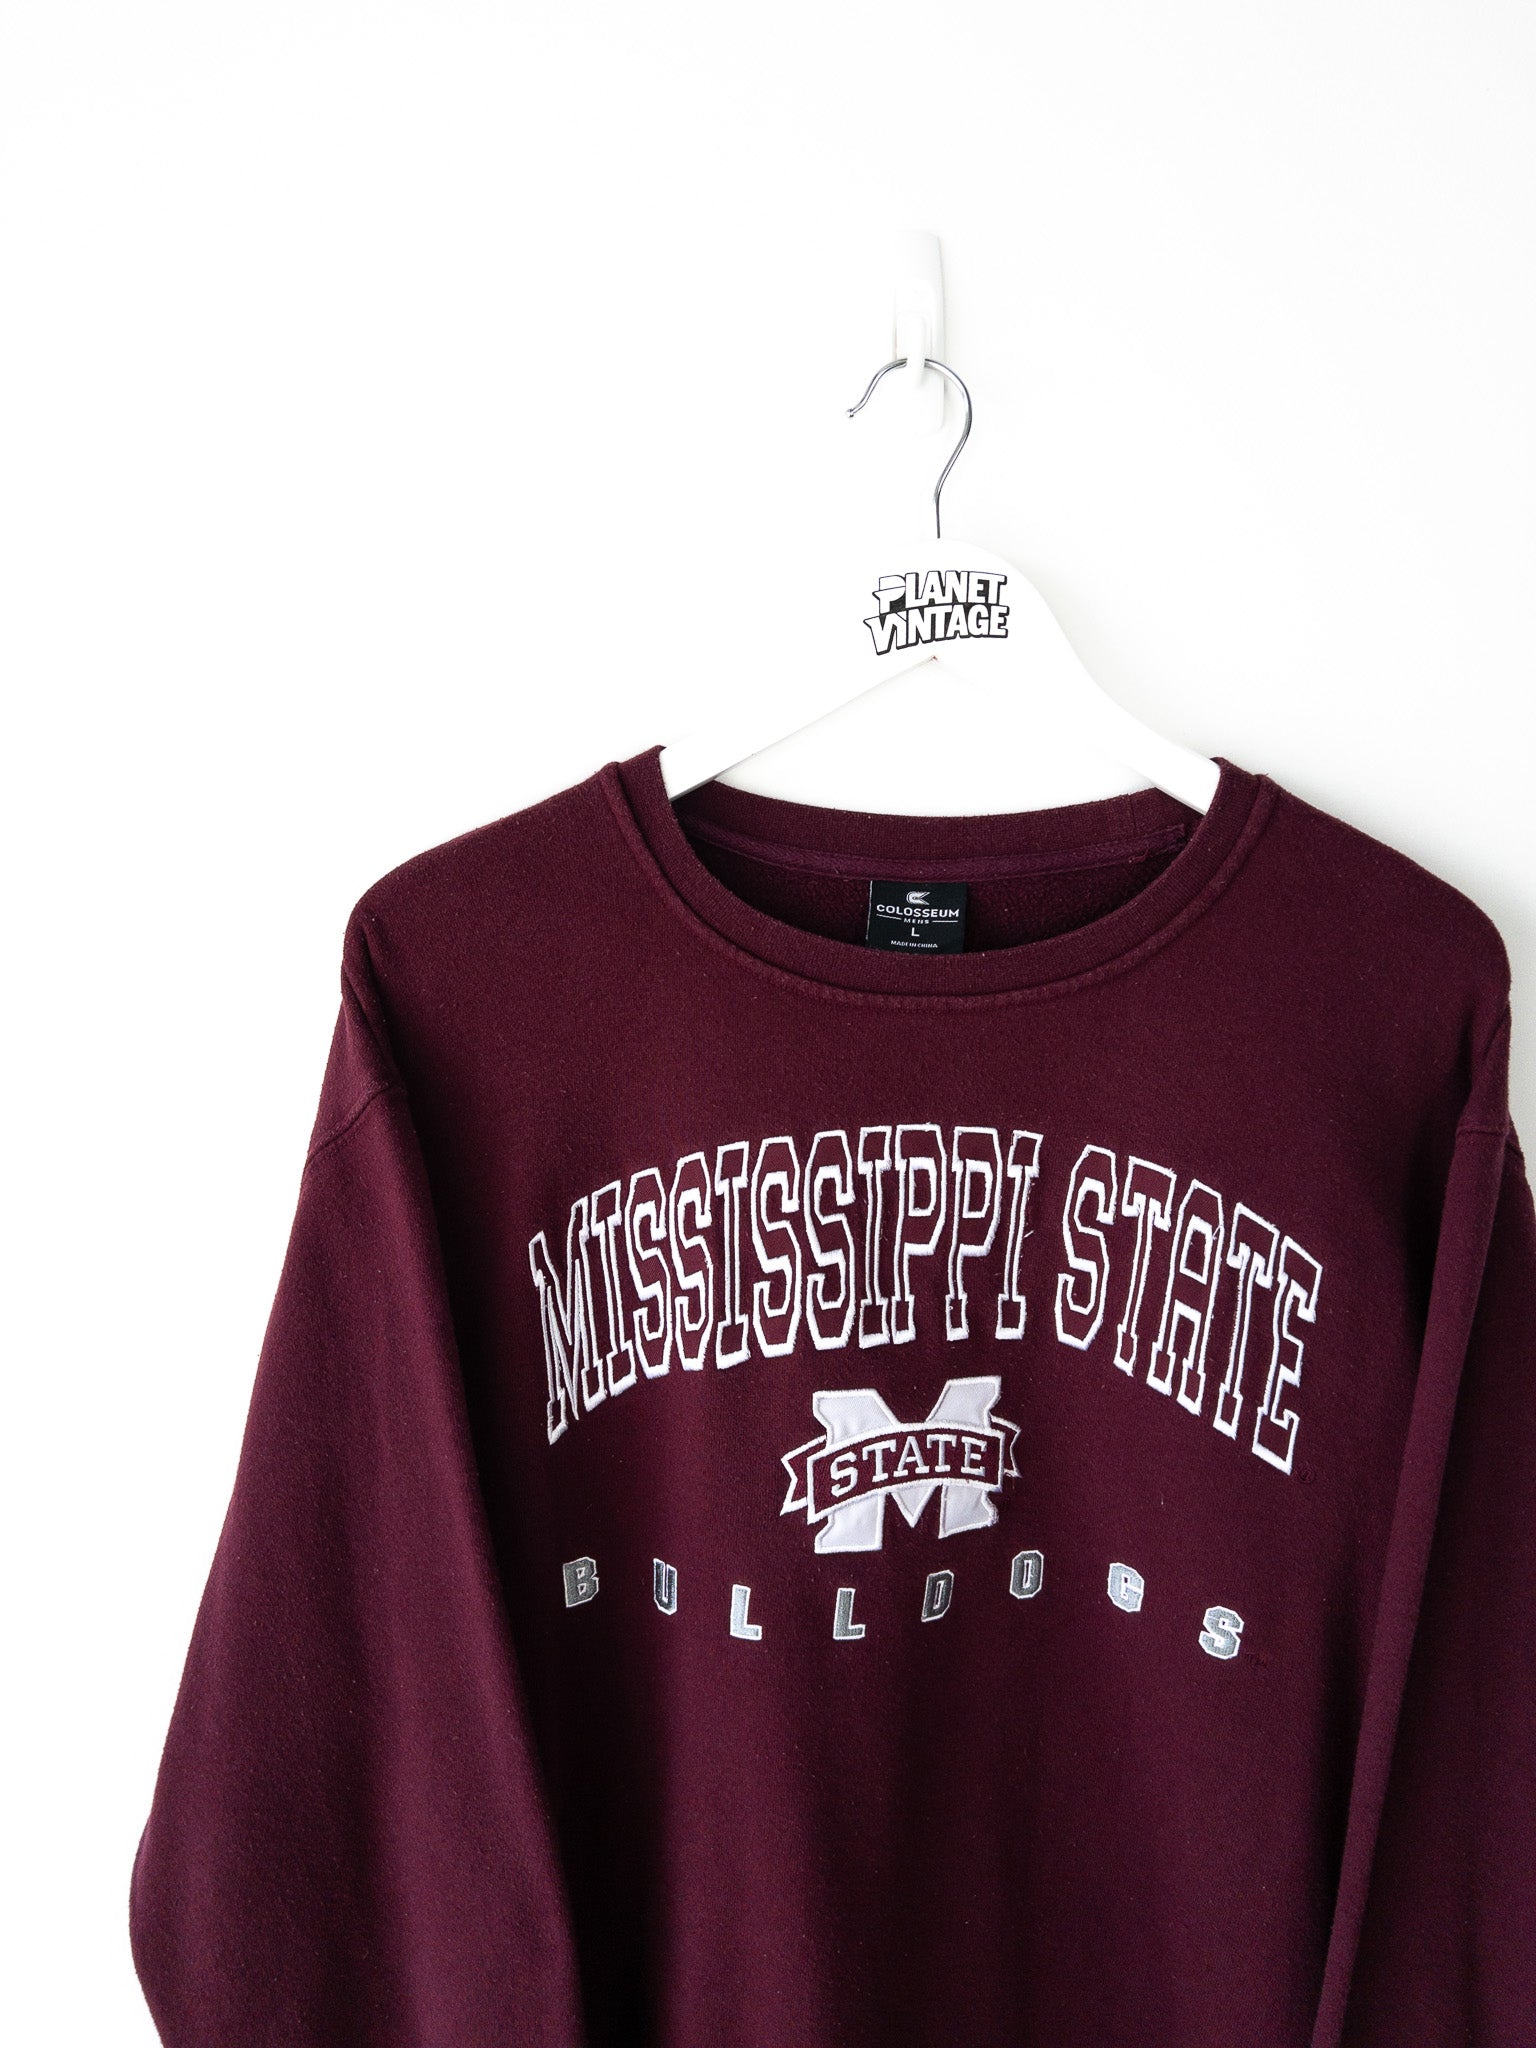 Vintage Mississippi State Bulldogs Sweatshirt (L)